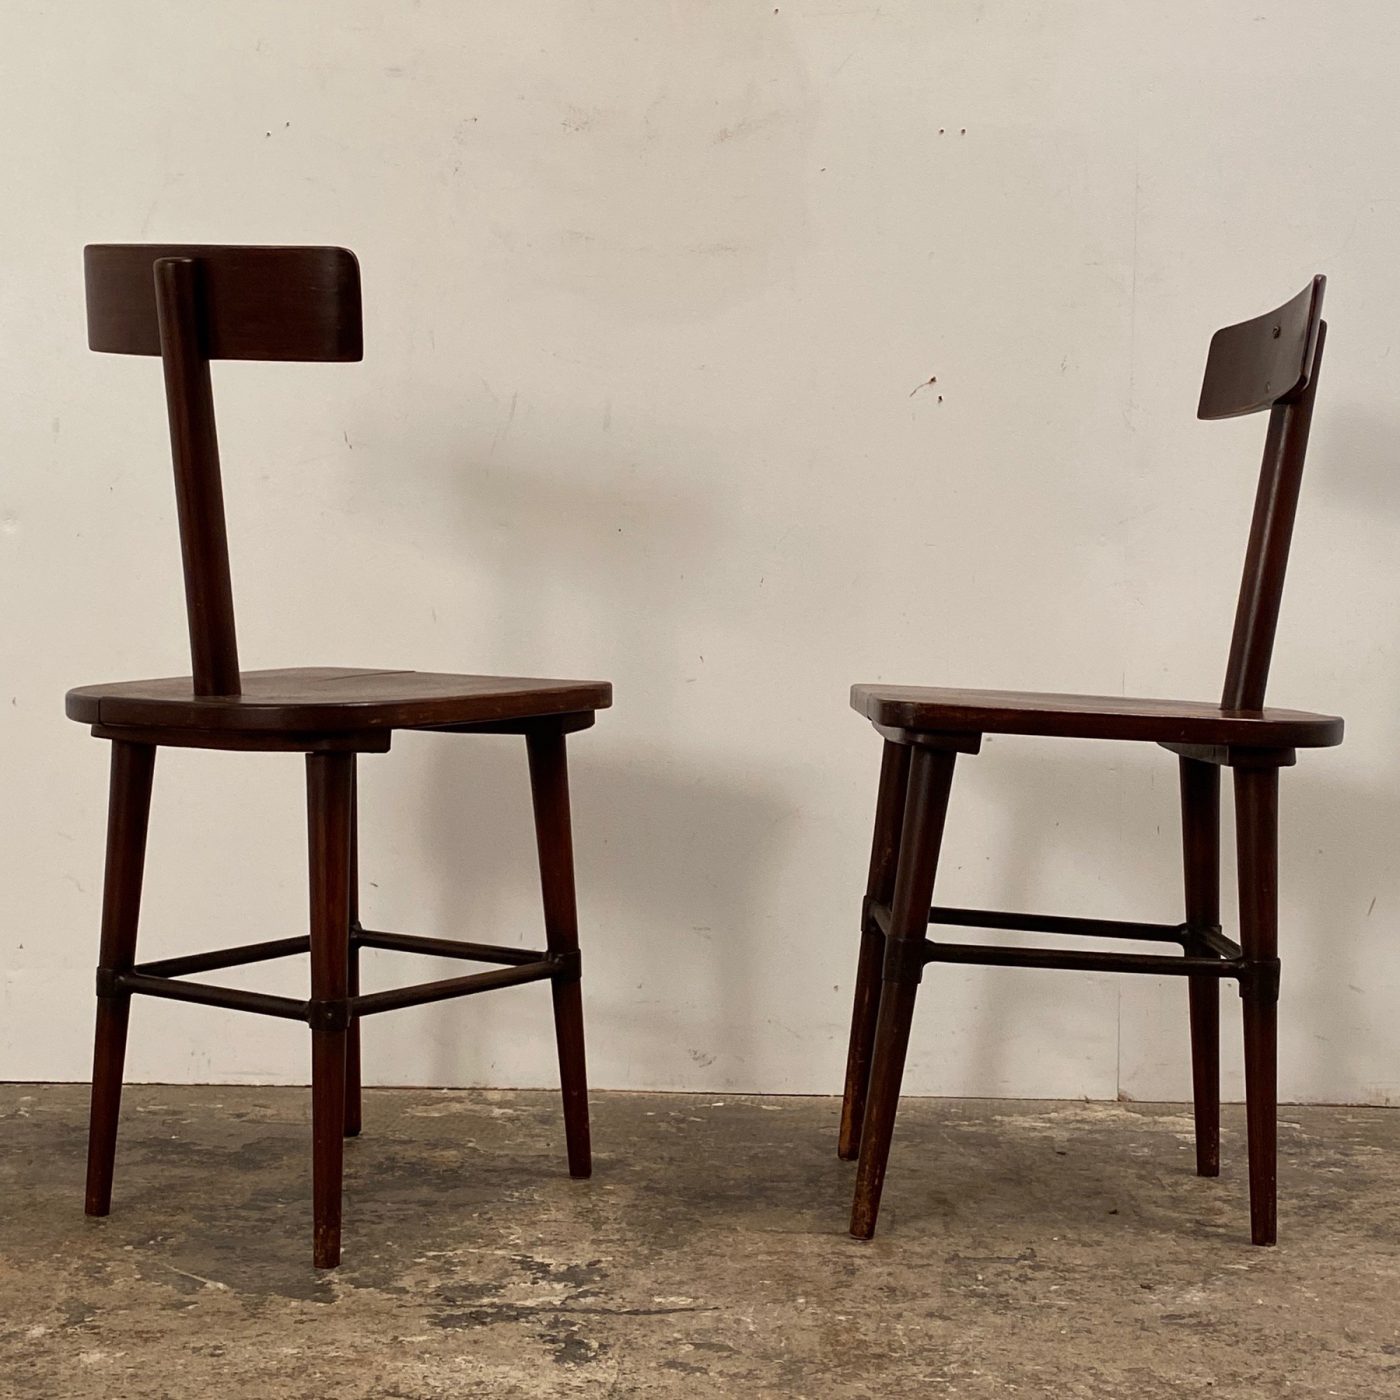 objet-vagabond-brutalist-chairs0006